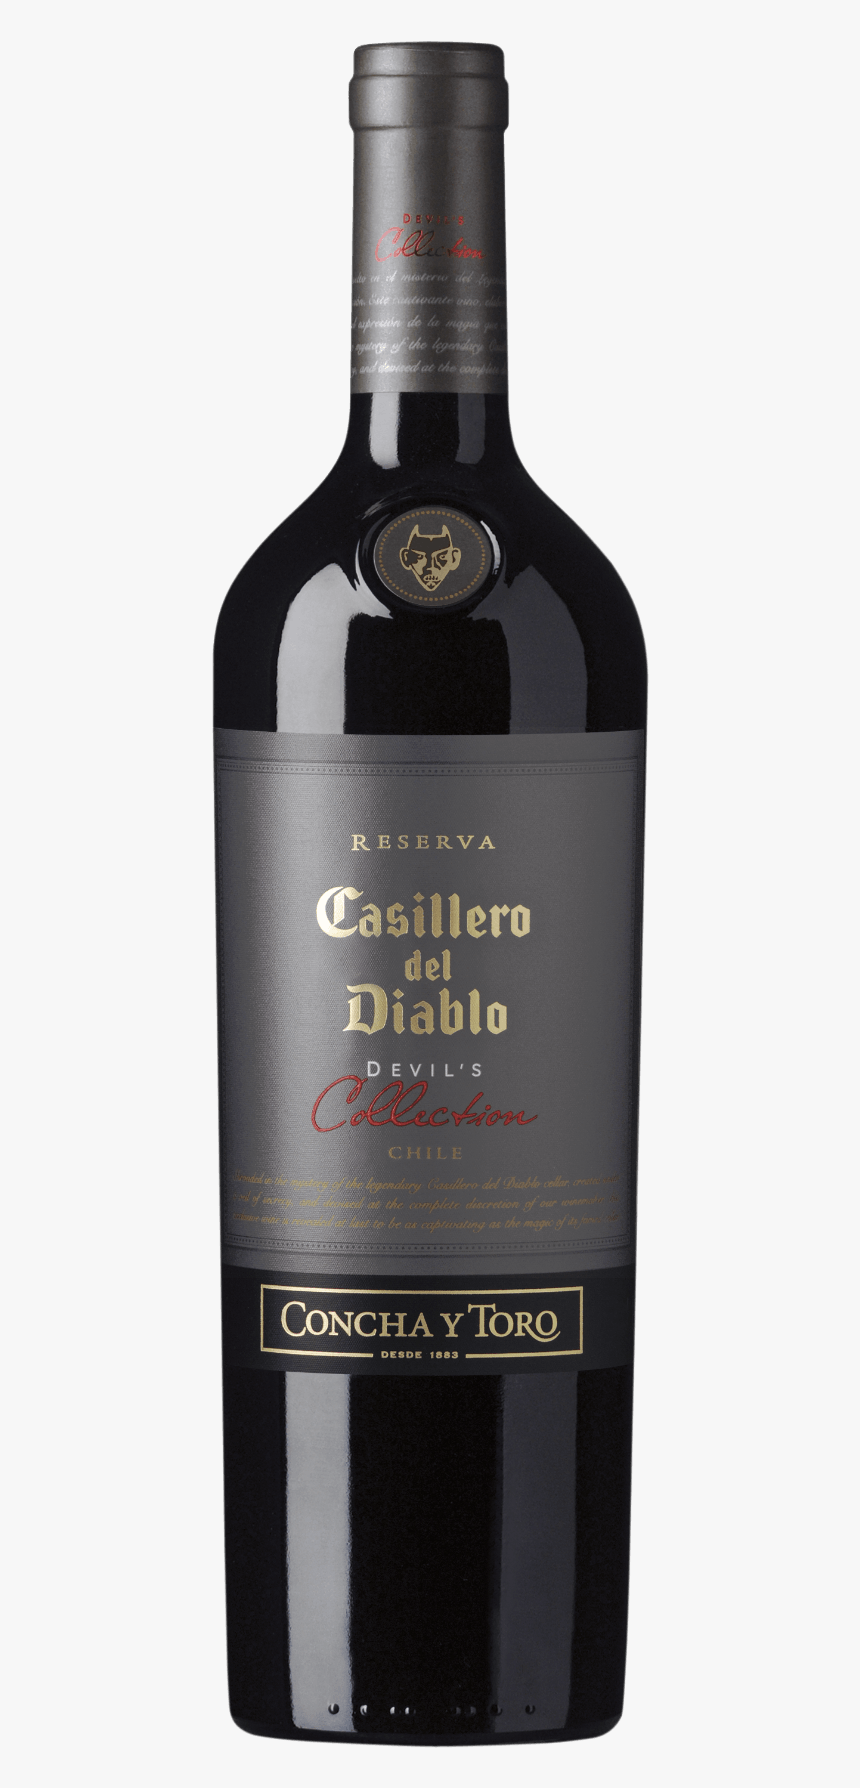 Concha Y Toro Devil S Collection Red 2016 Bottle - Casillero Del Diablo Devils Collection